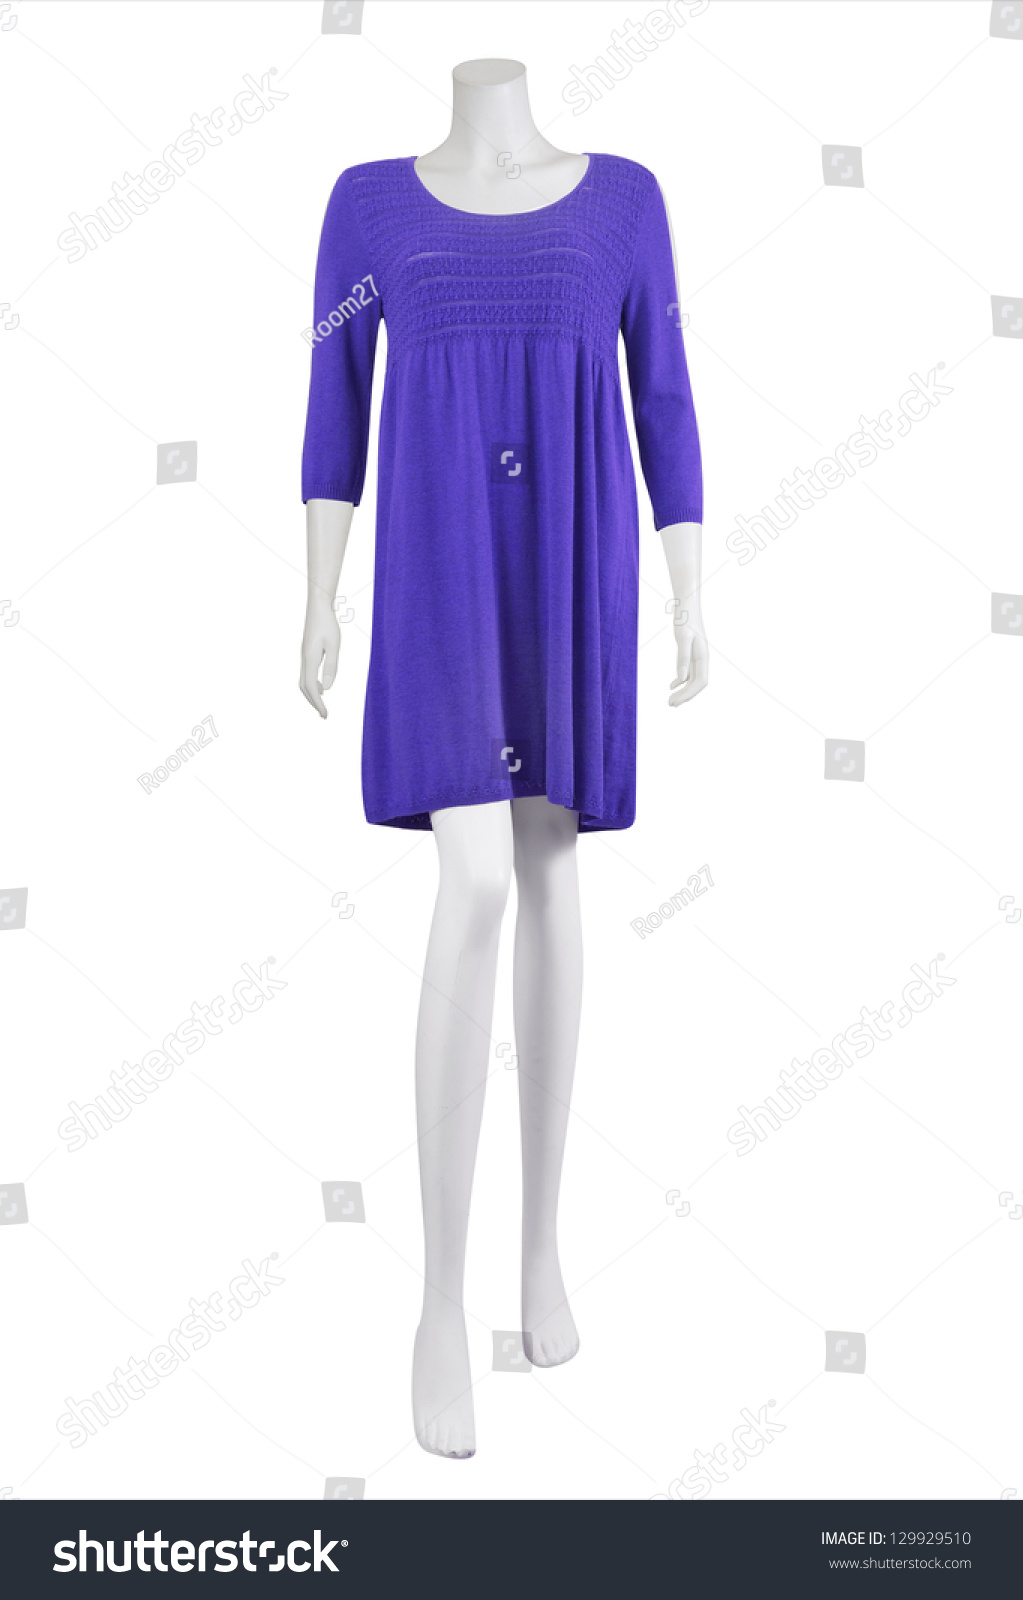 Stylish Purple Dress On Mannequin Stock Photo 129929510 - Shutterstock